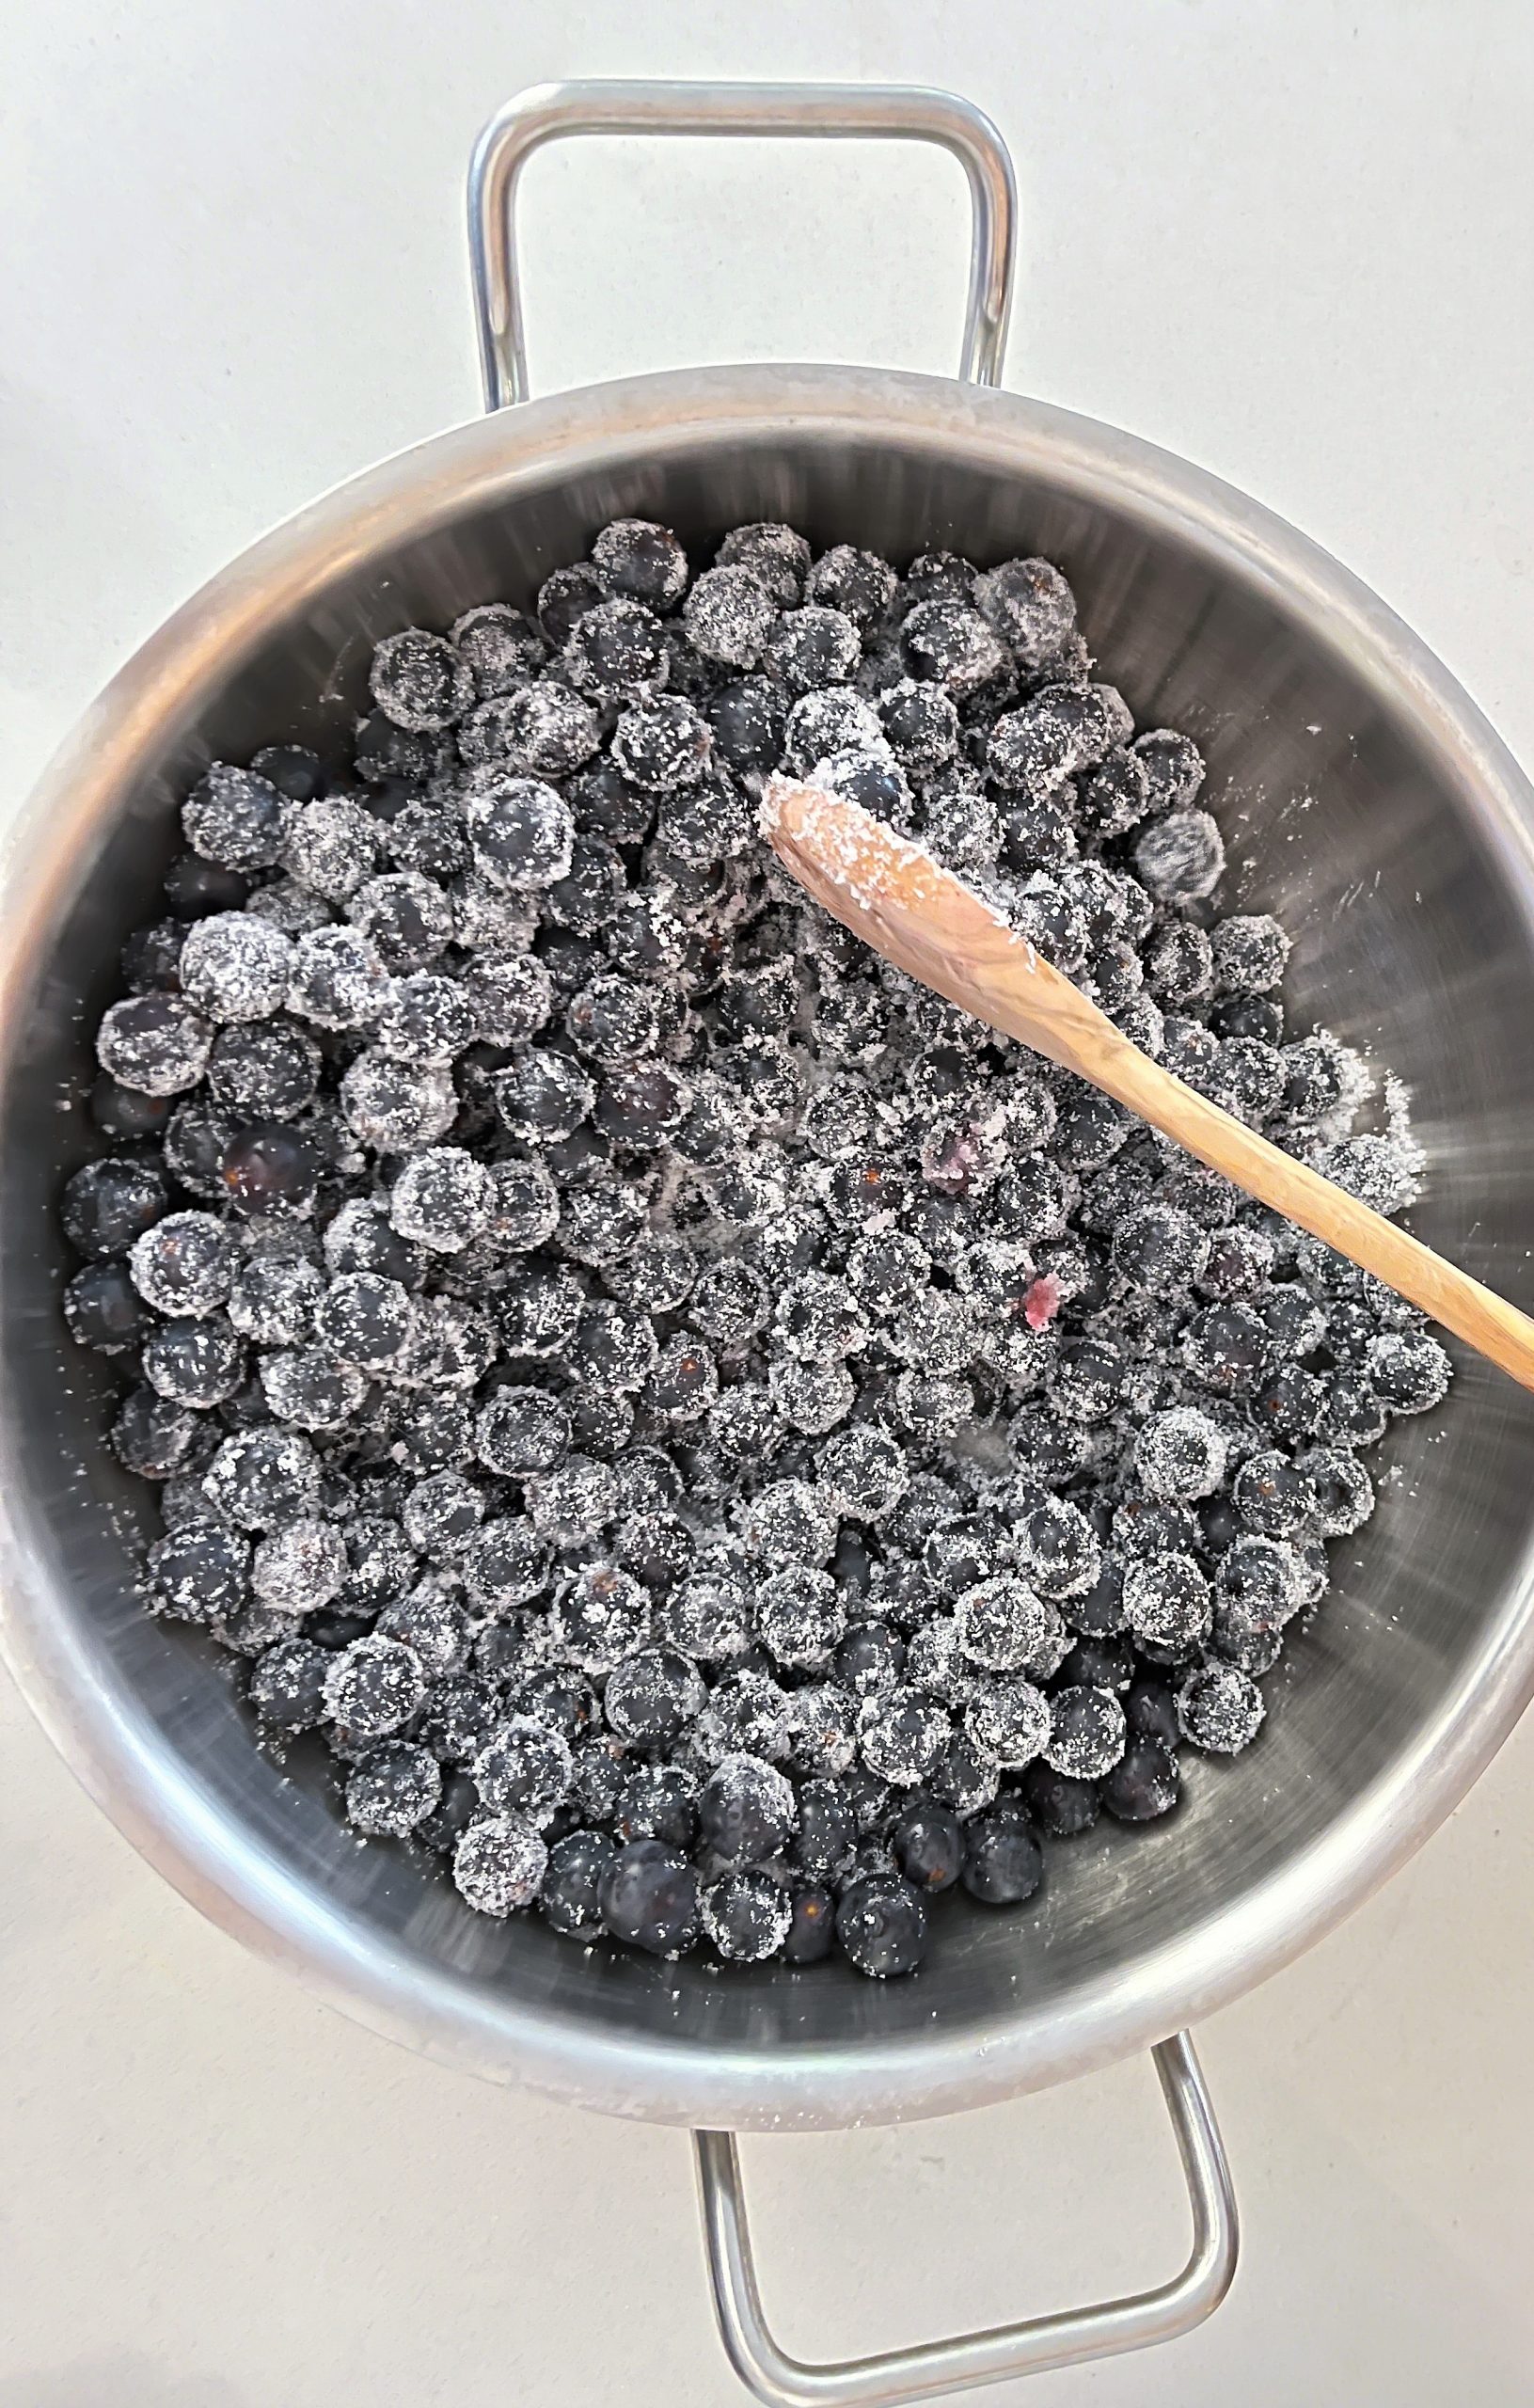 Concord Grapes Jam Recipe: put the grapes and sugar in a pot